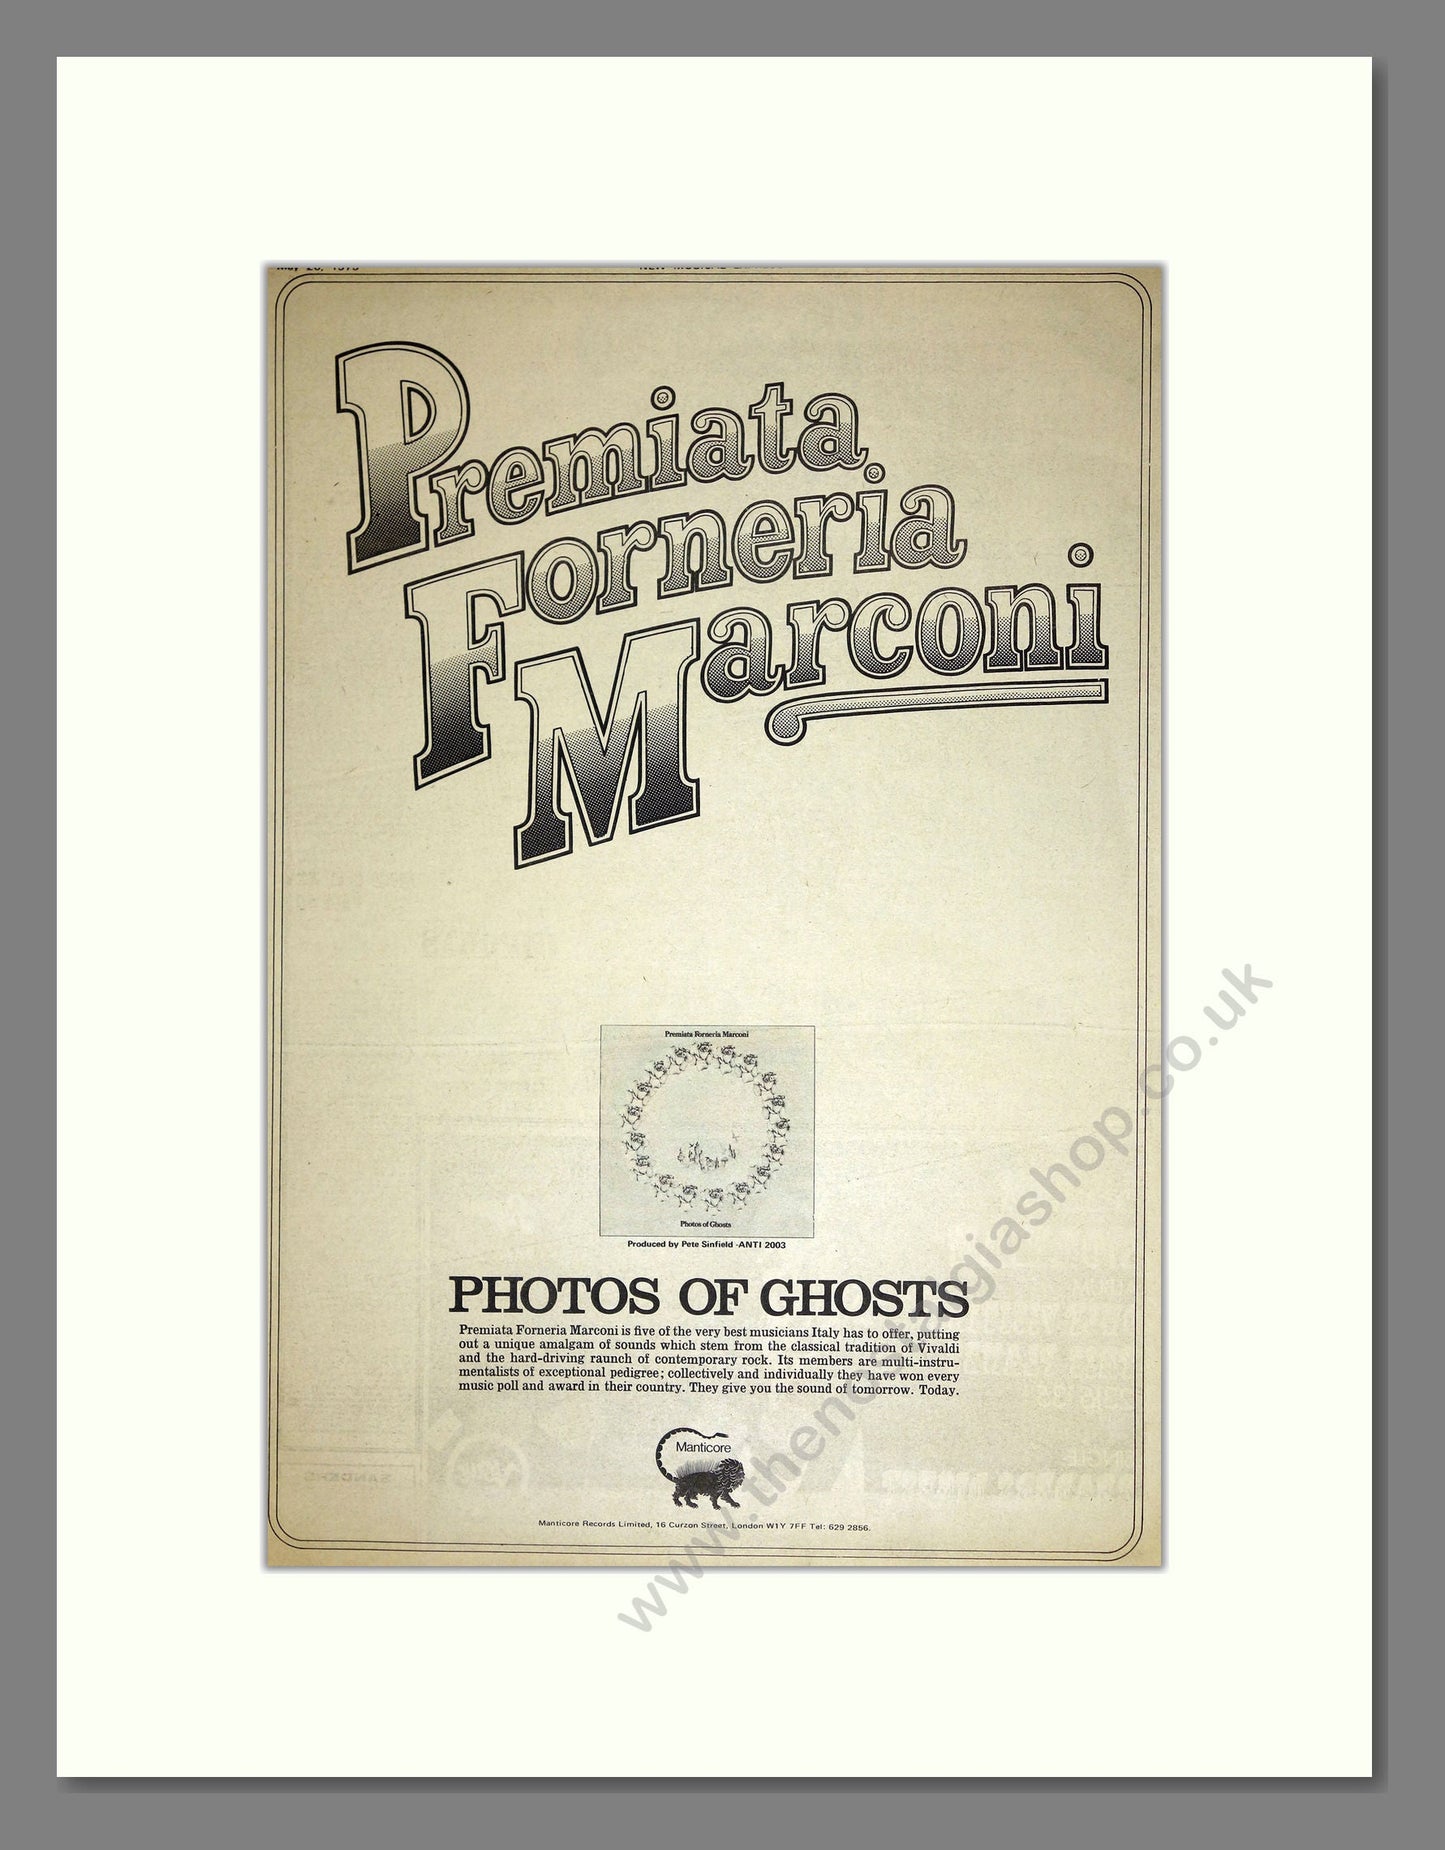 Premiata Forneria Marconi (PFM) - Photos of Ghosts. Vintage Advert 1973 (ref AD16783)